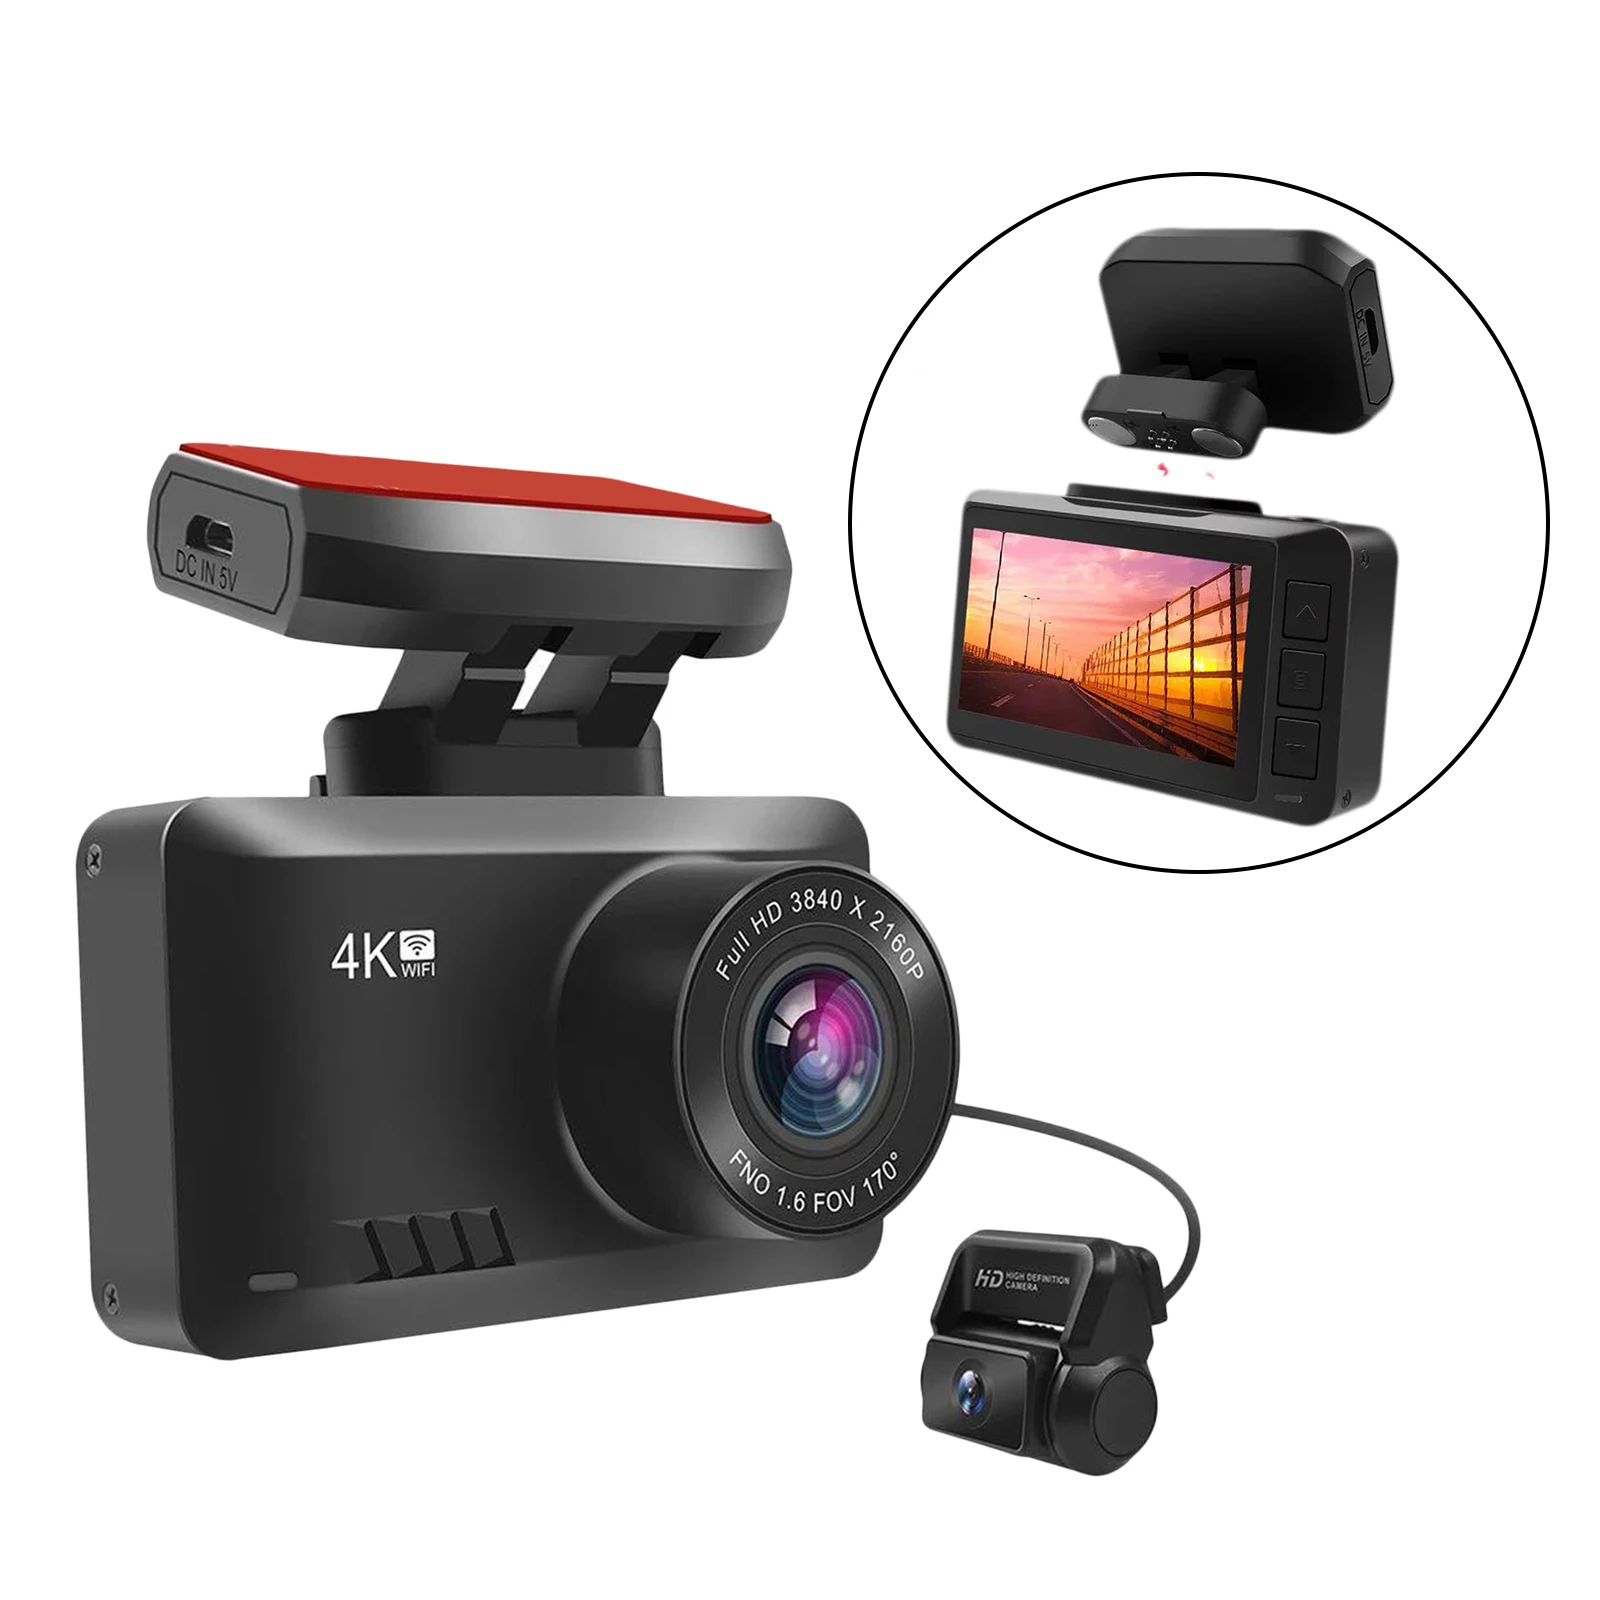 Car Camera Dual Dash Cam 4K+1080P Front Rear WiFi & GPS Video Recorder Dashboard Camera Loop Recording